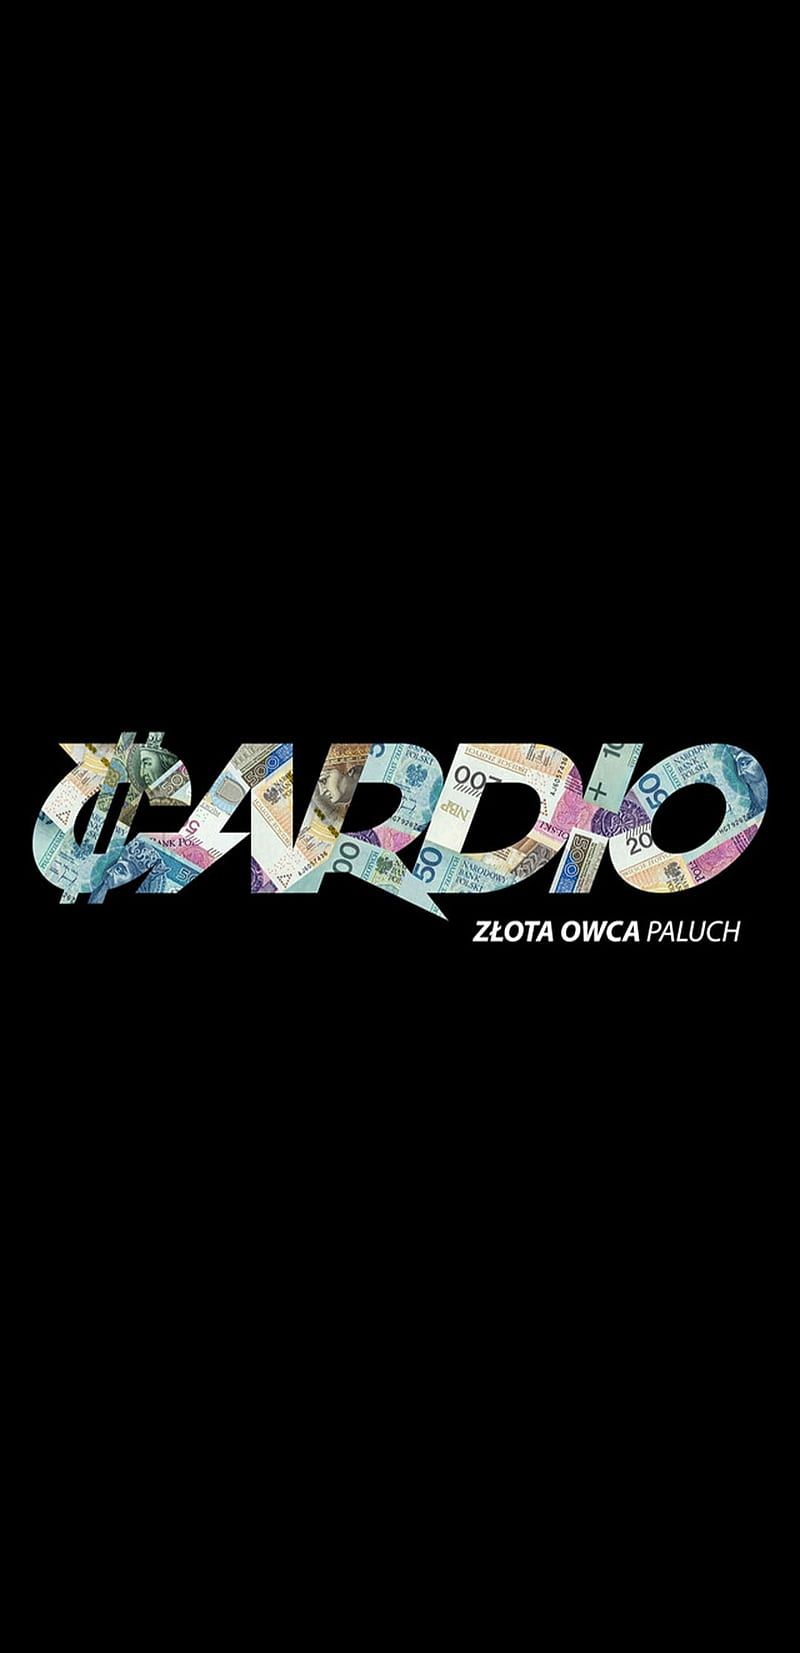 Cardio, bor, kurwa, paluch, polska, rap, szaman, HD phone wallpaper